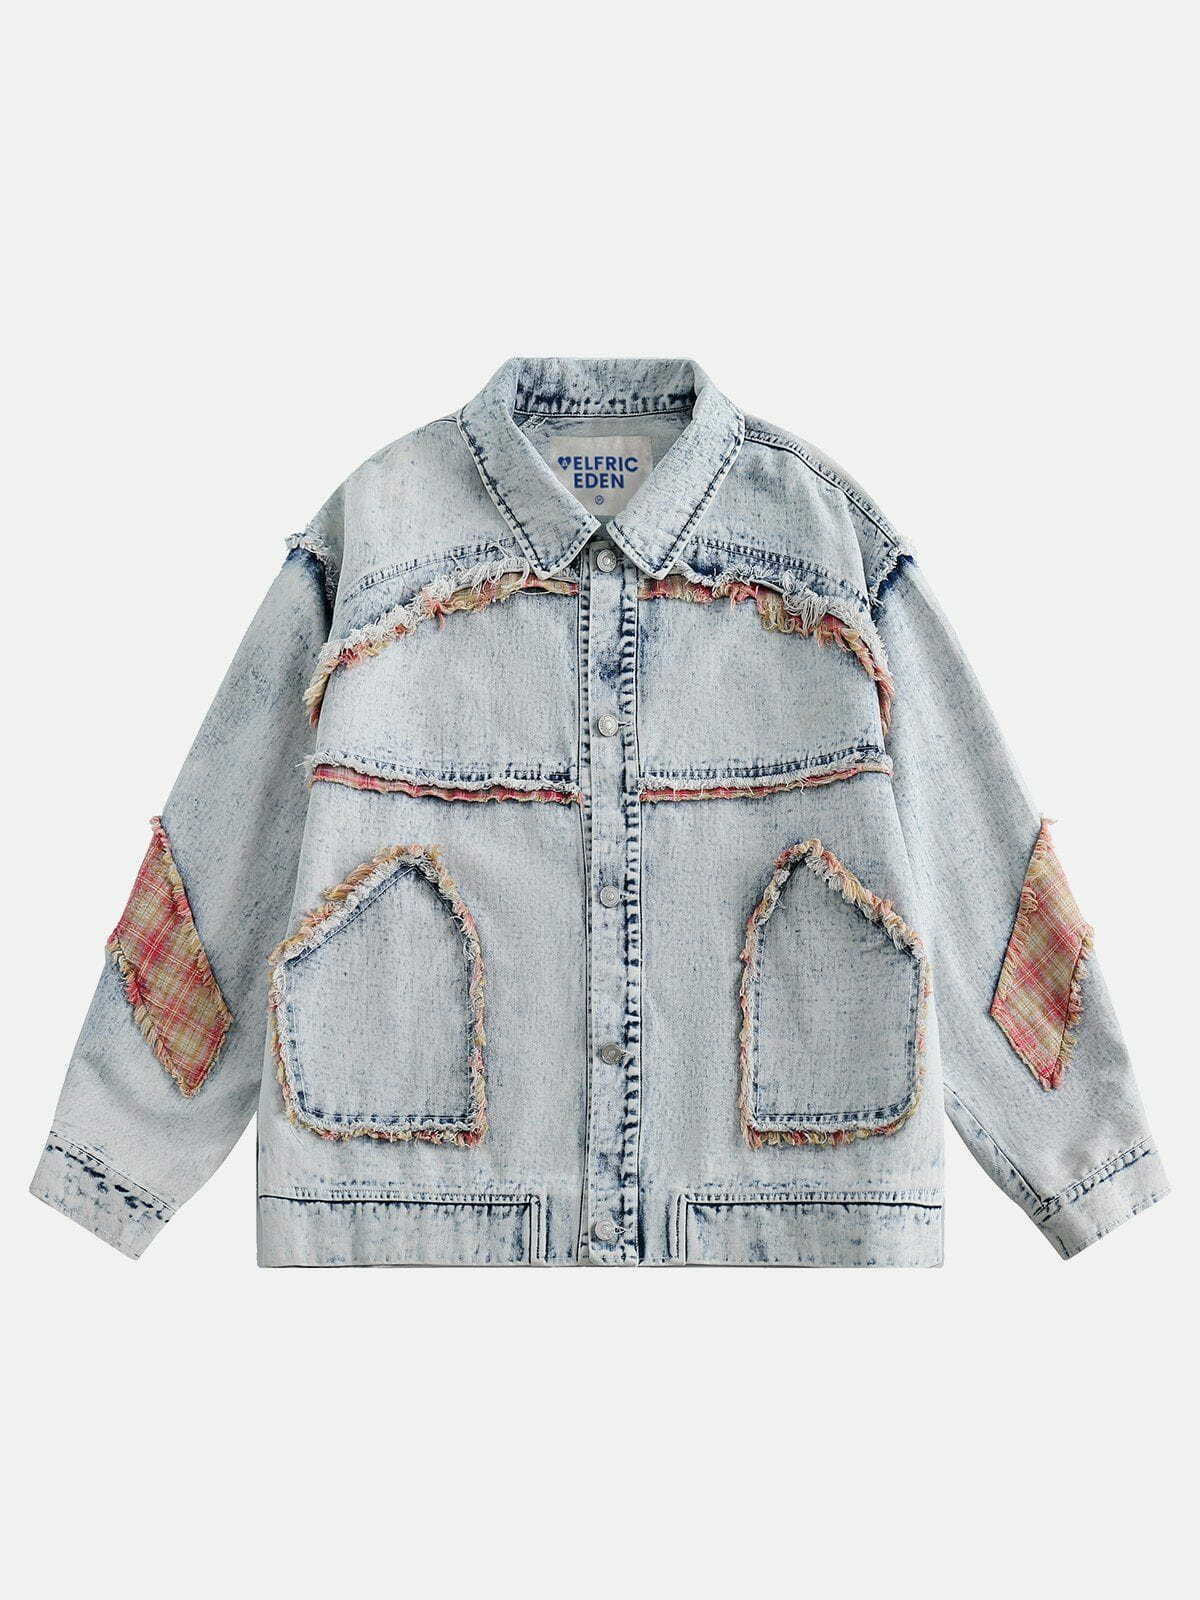 fringe patchwork denim jacket edgy & retro streetwear 5027